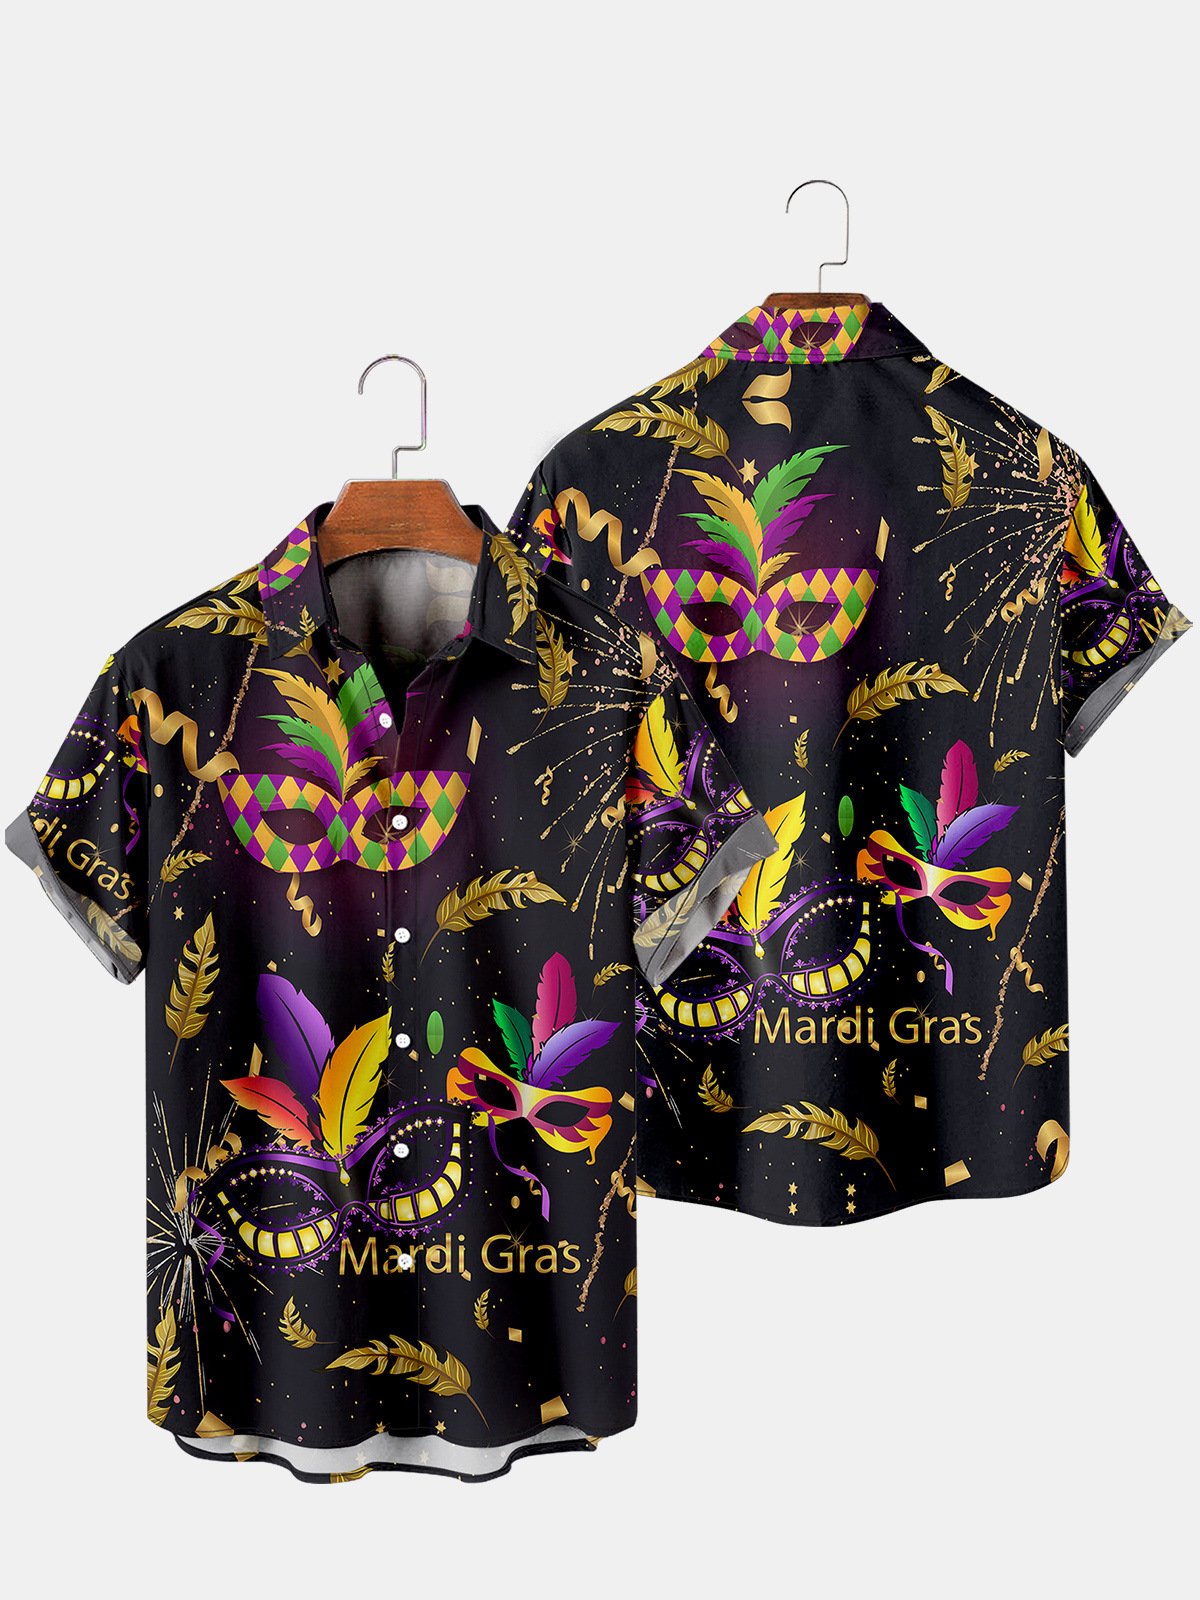 Men's Mardi Gras Mask Fireworks Print Comfortable Blend Short Sleeve Hawaiian Shirt